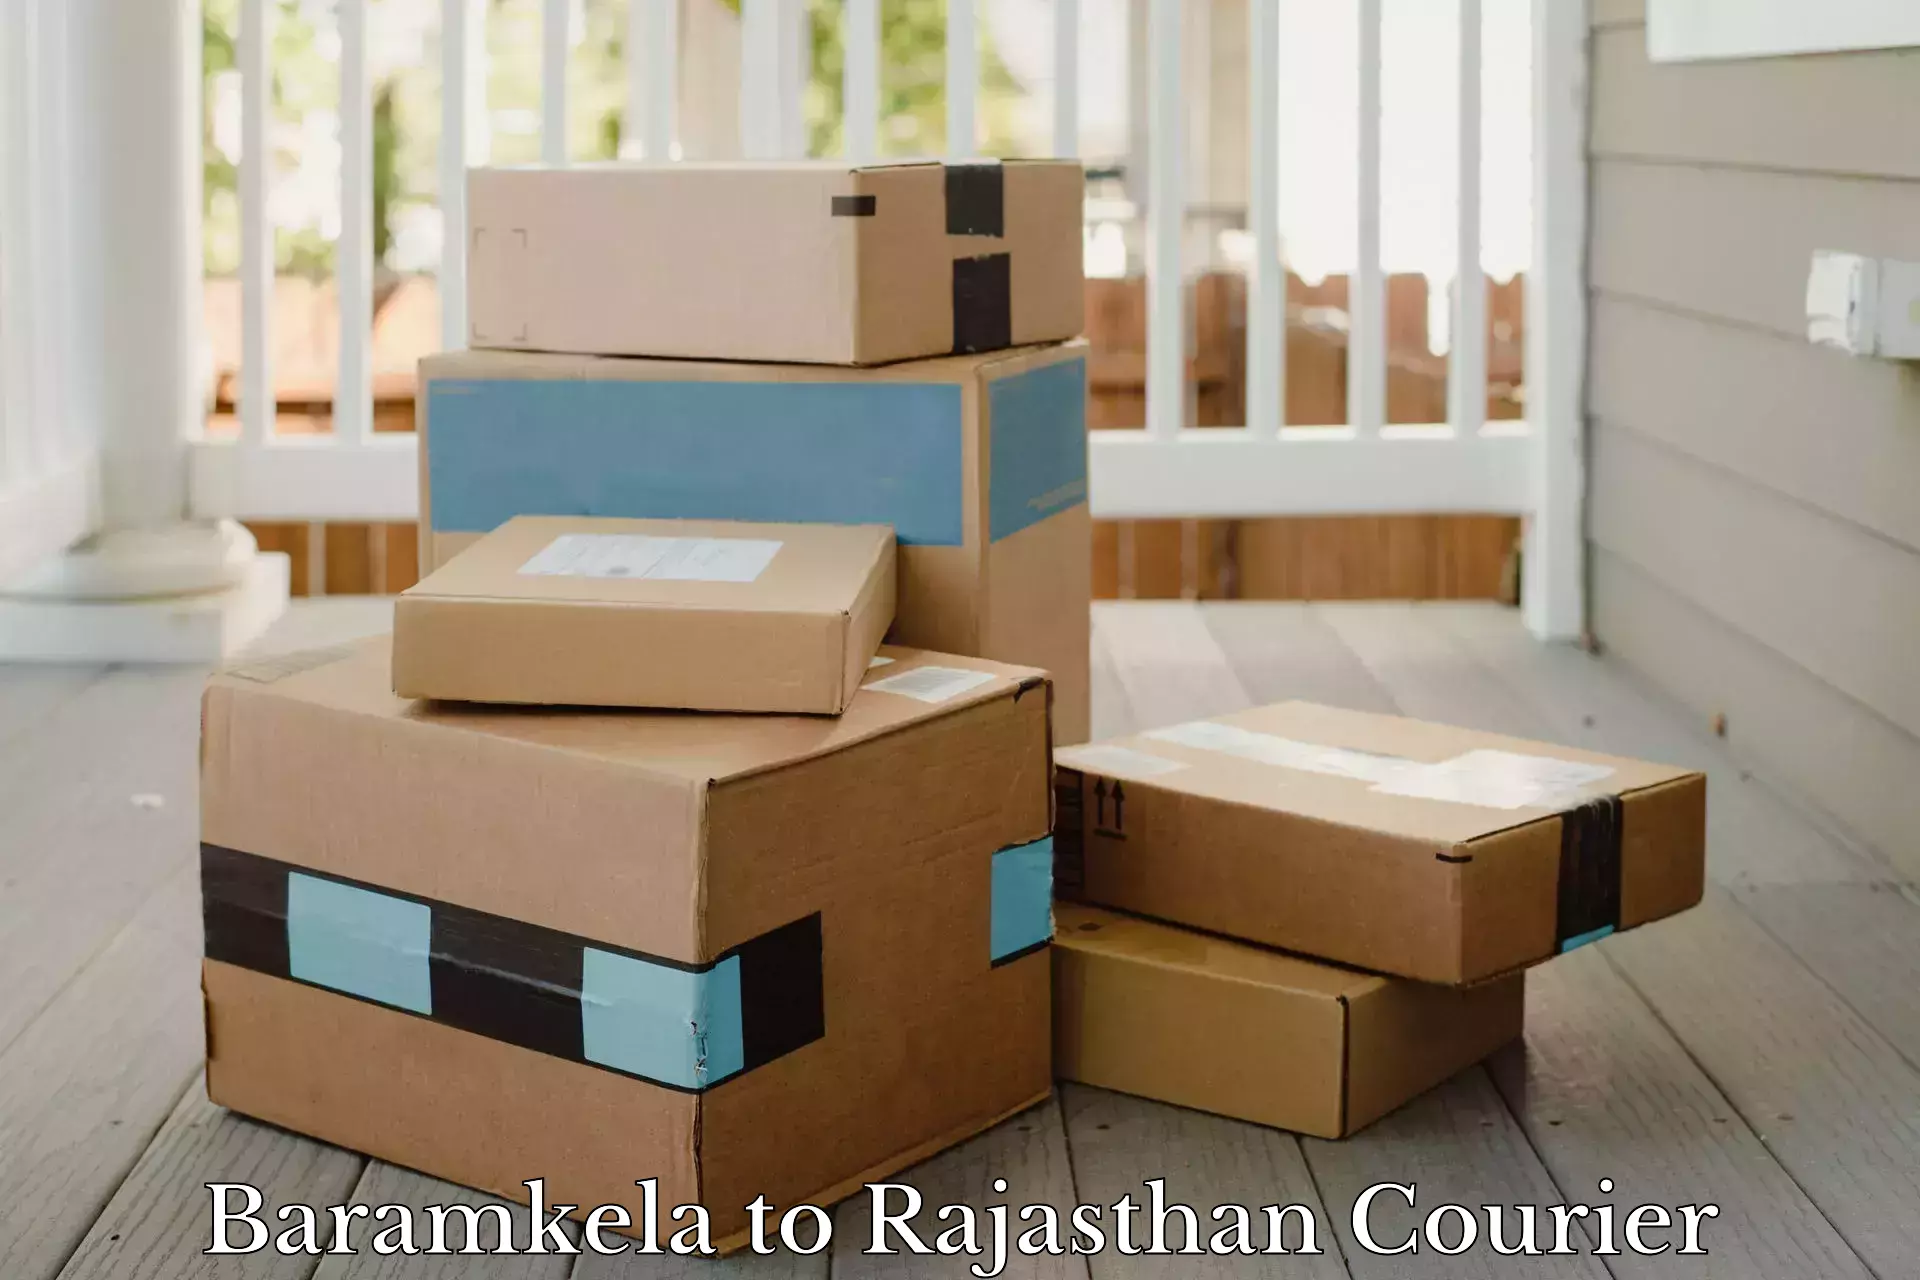 Reliable logistics providers Baramkela to Yeswanthapur